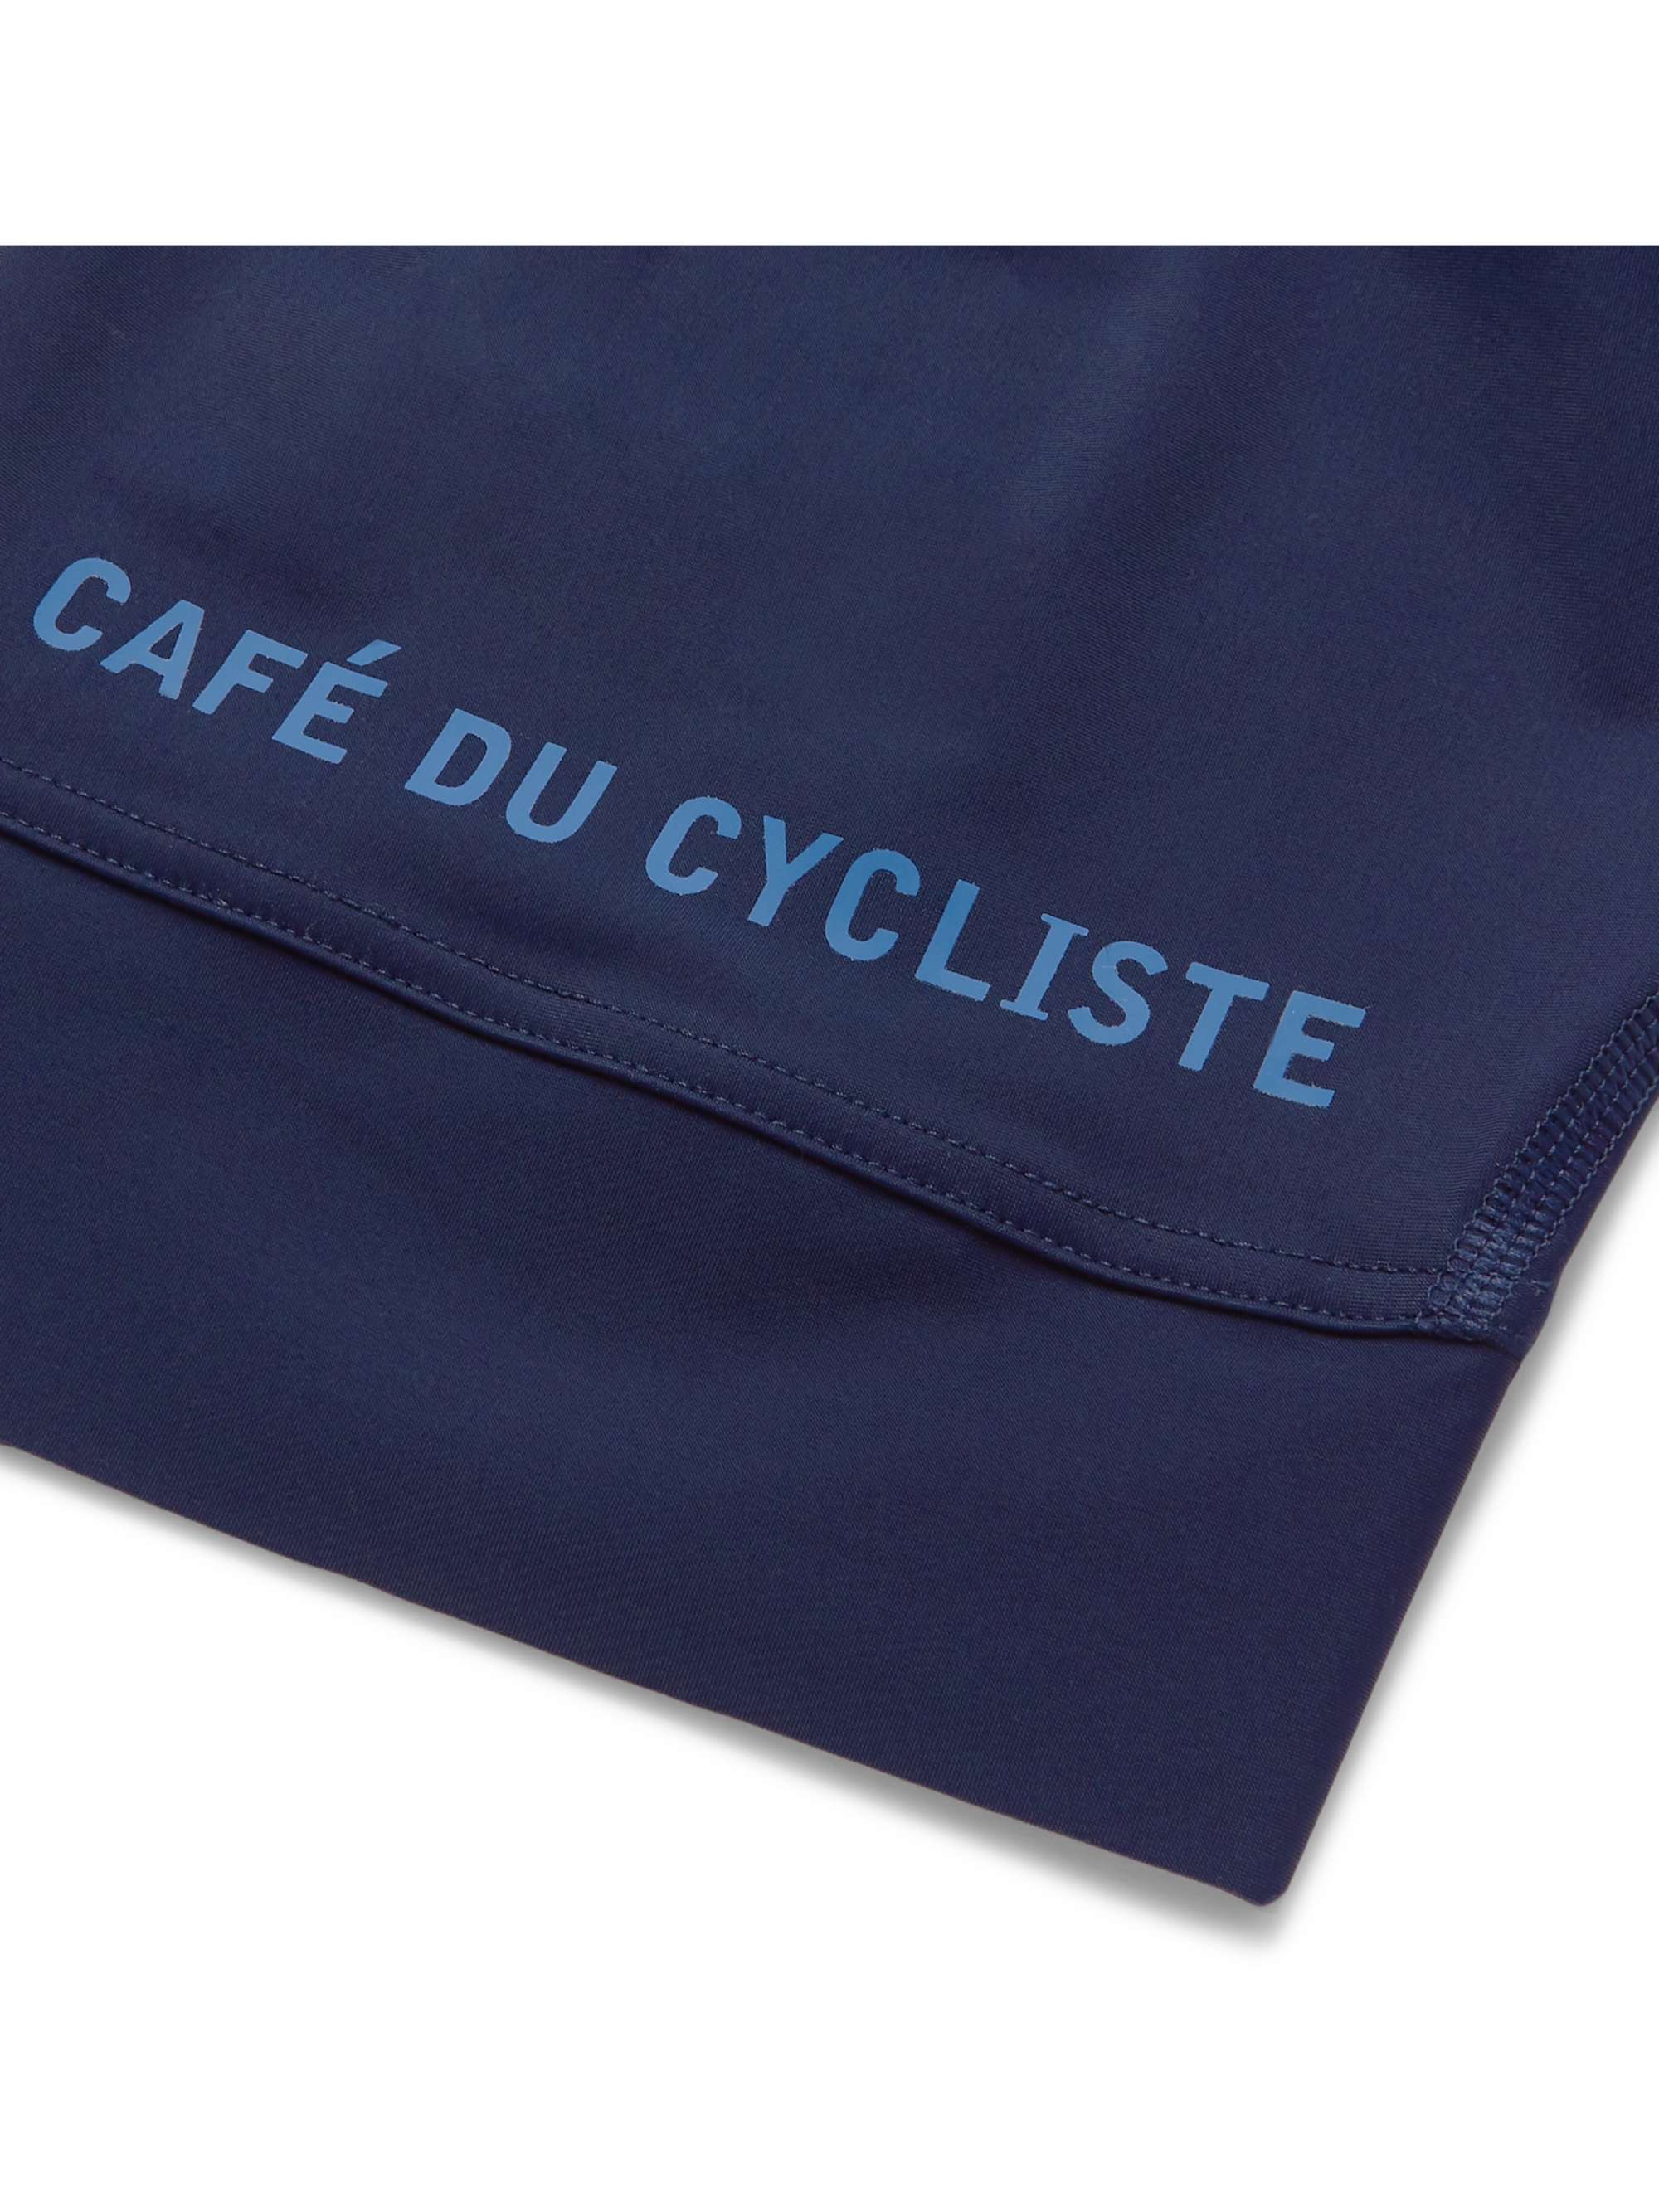 CAFE DU CYCLISTE Marinette Mesh-Panelled Cycling Bib Shorts